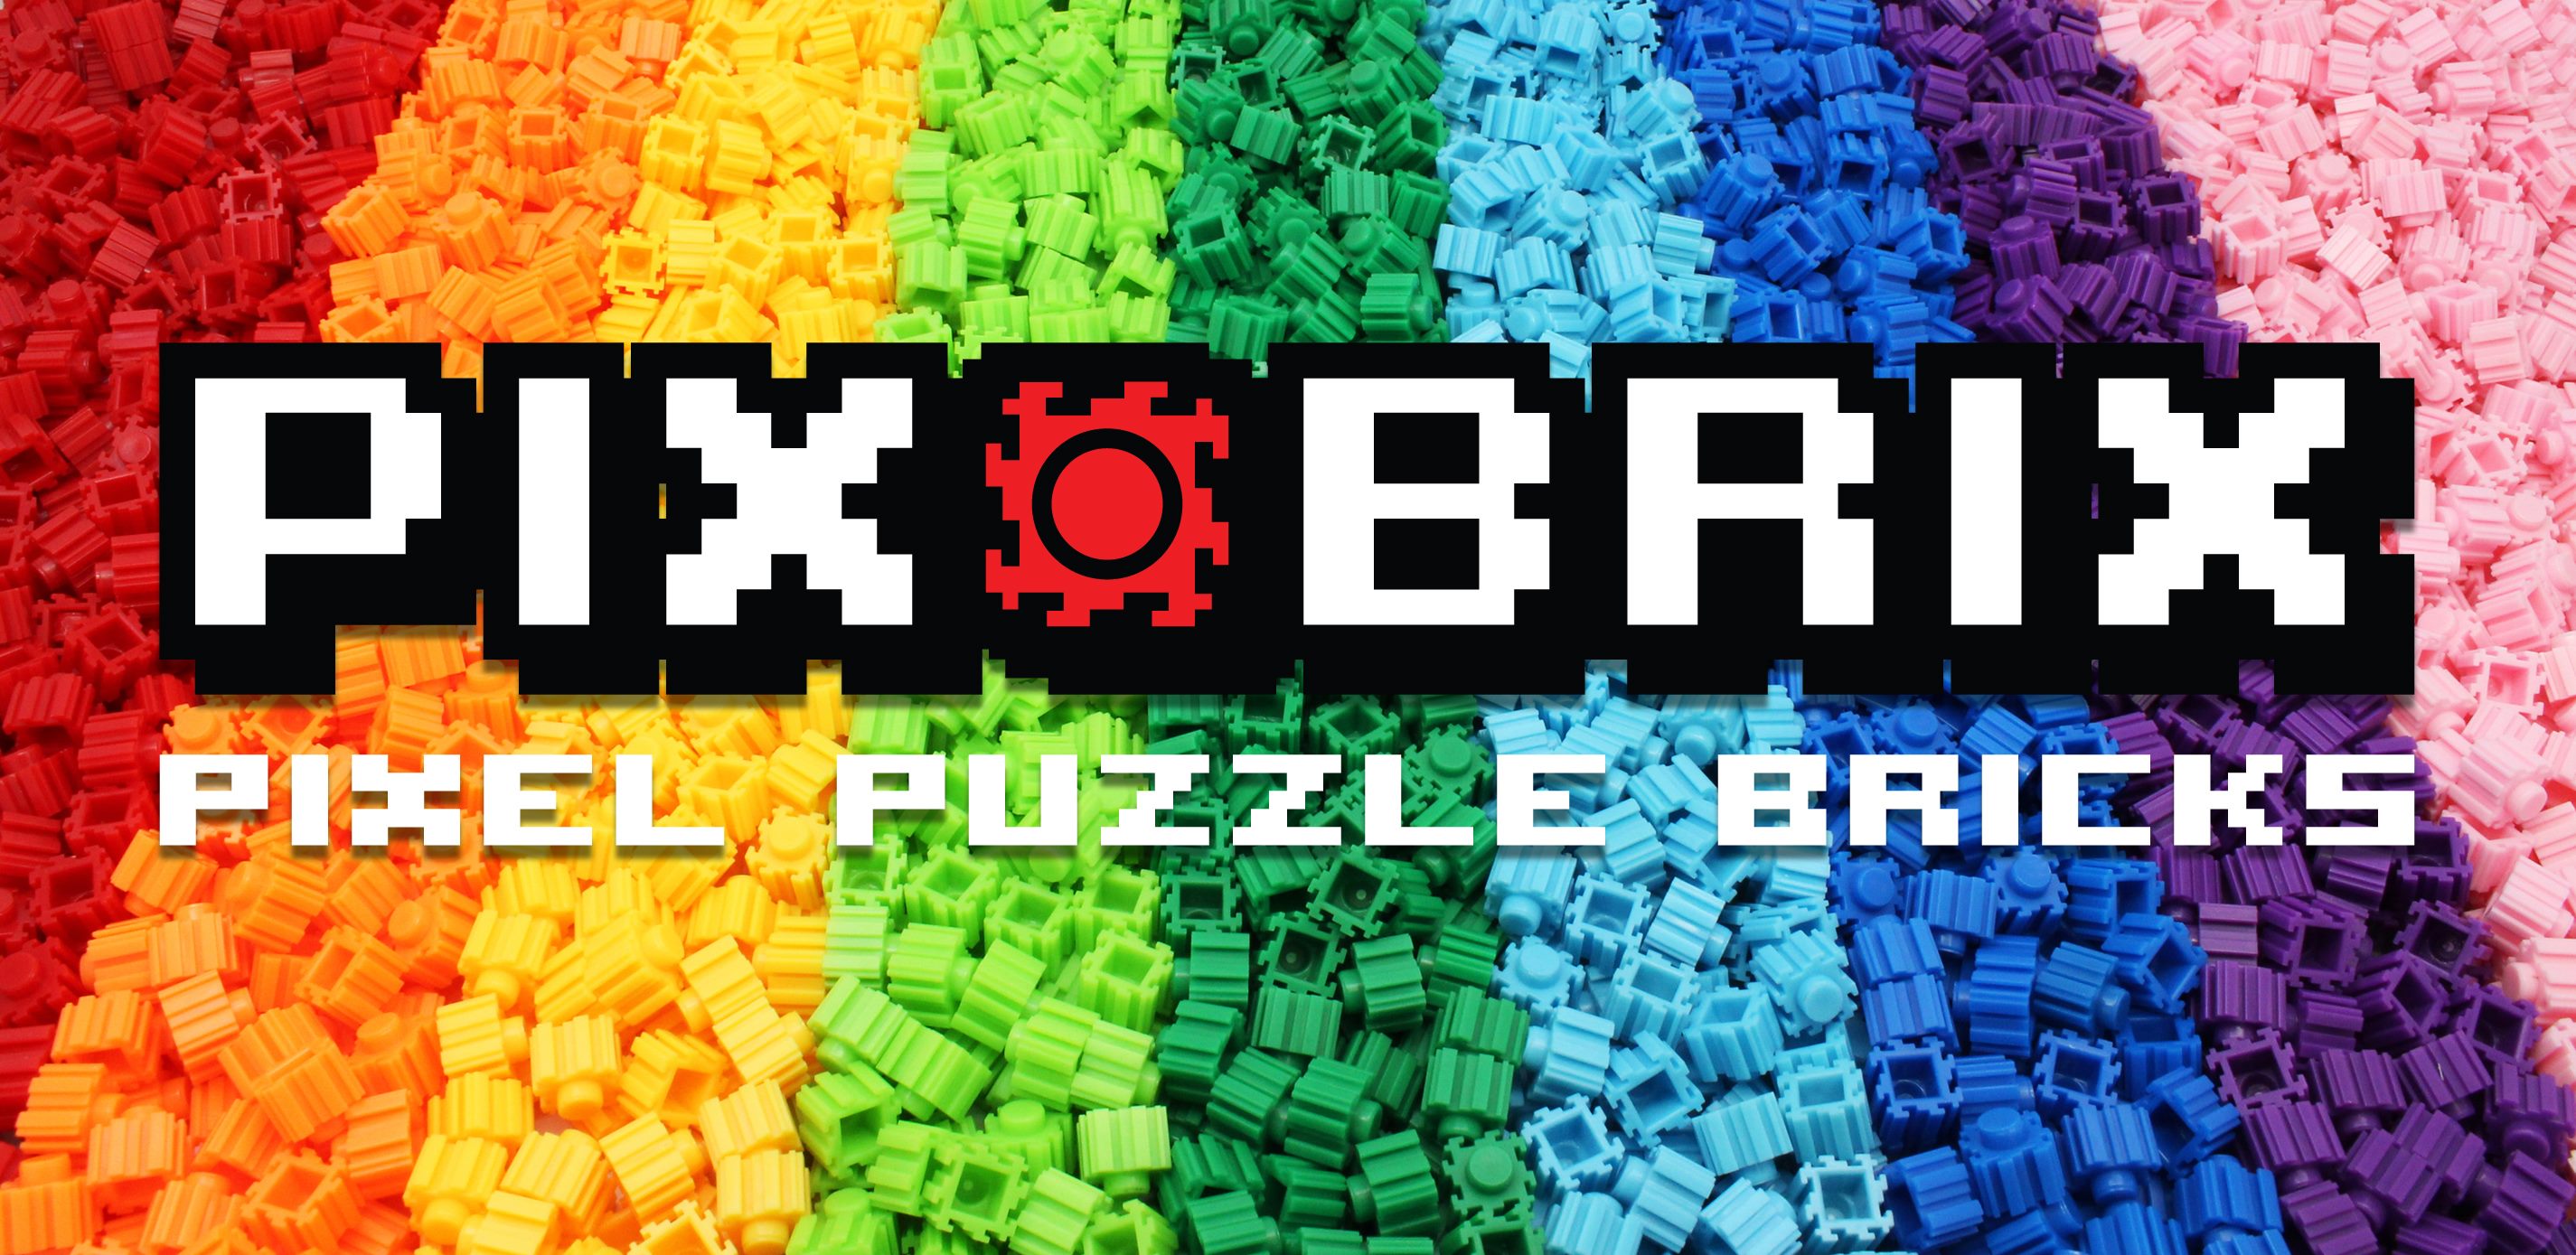 Pix Brix Ohio logo